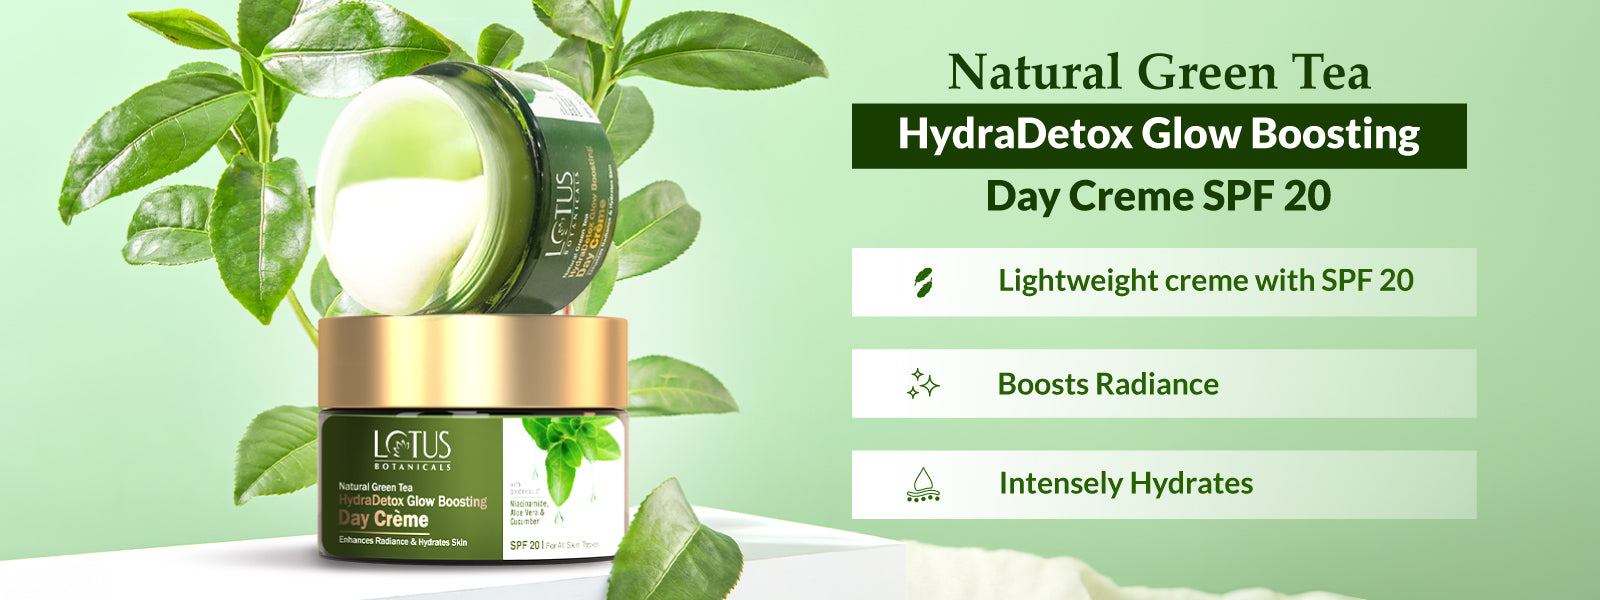 Natural Green Tea HydraDetox Glow Boosting Day Crème SPF 20